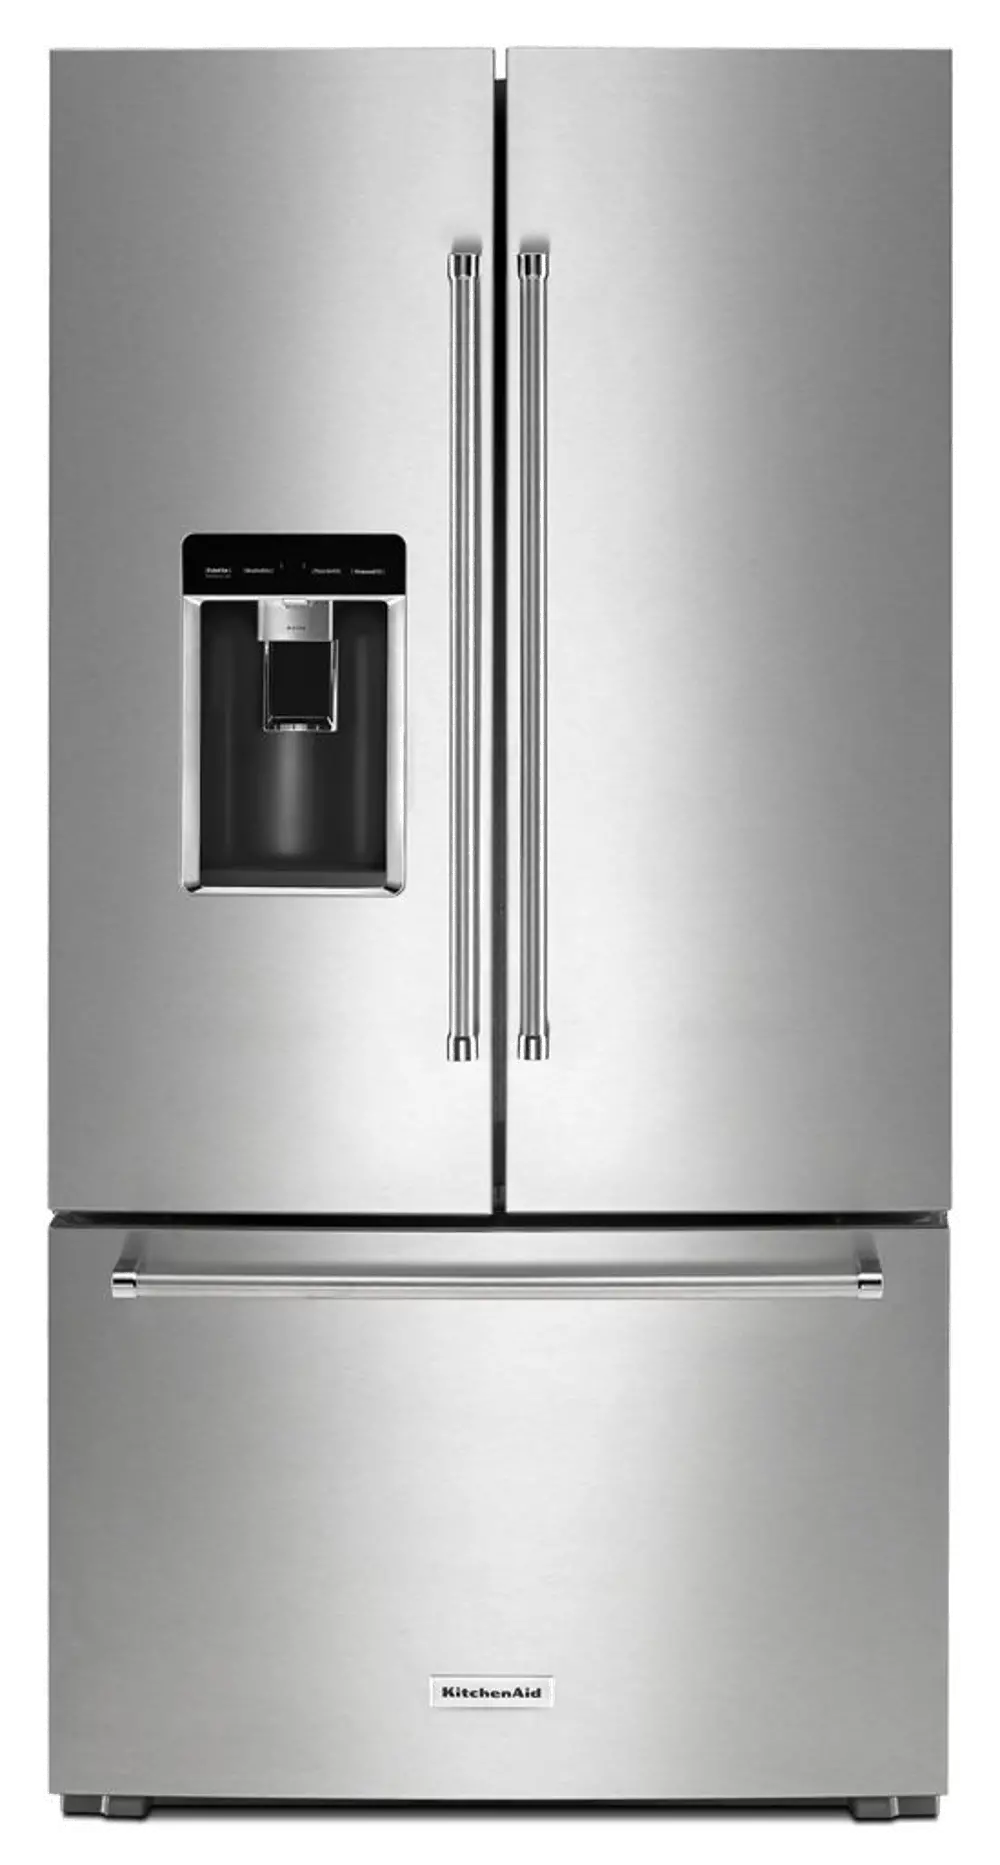 KRFC604FSS KitchenAid Counter Depth French Door Refrigerator - 23.76 cu. ft., 36 Inch Stainless Steel-1